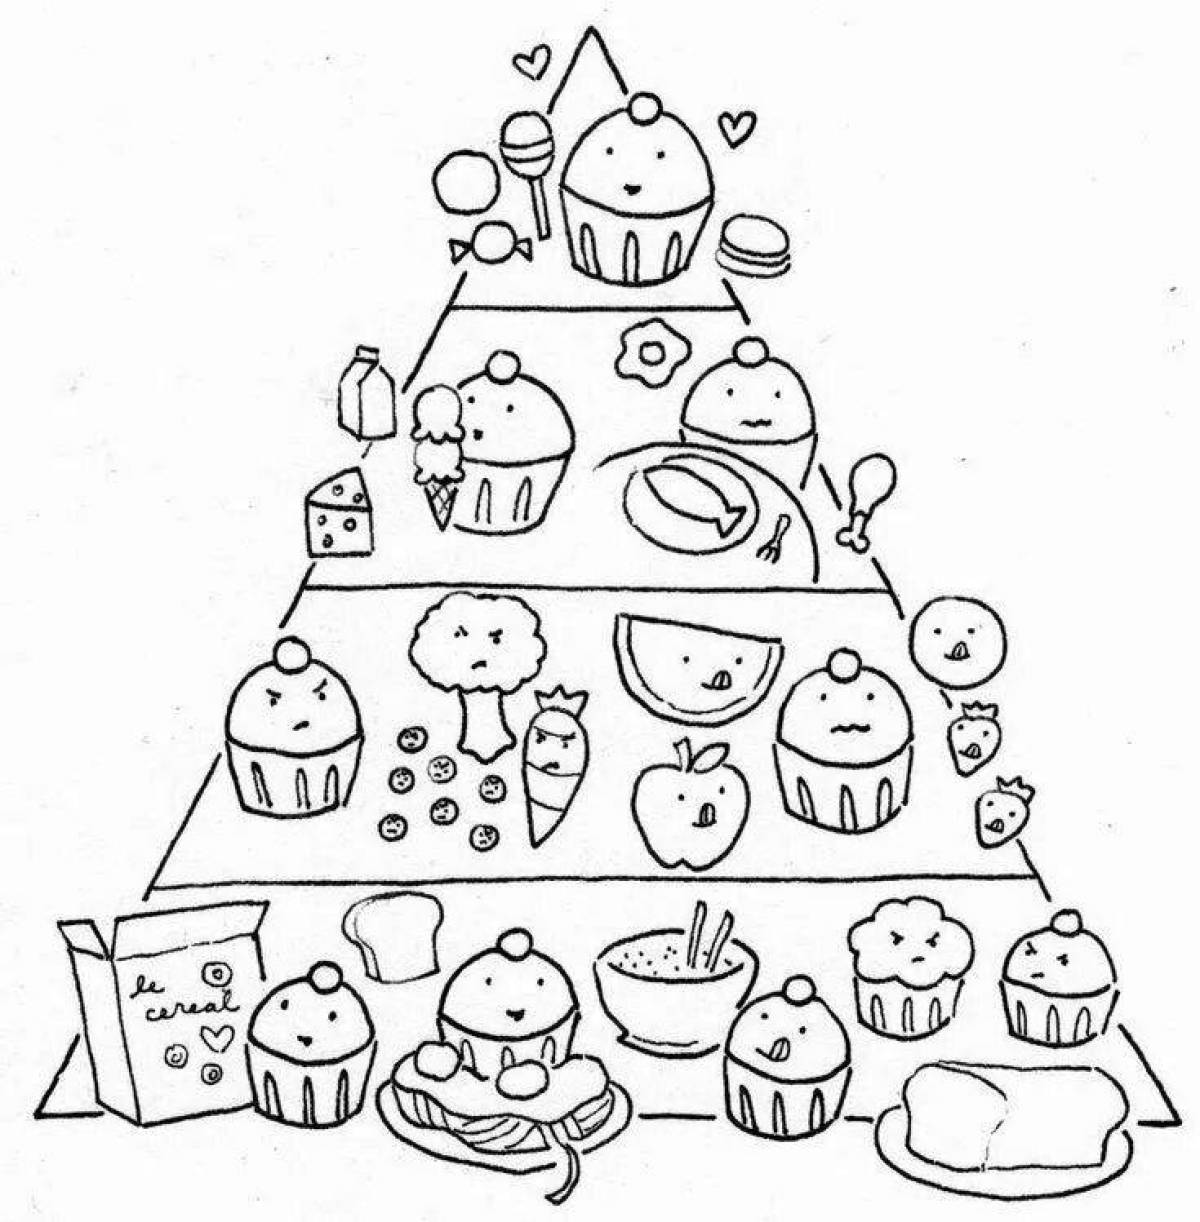 Food pyramid #3